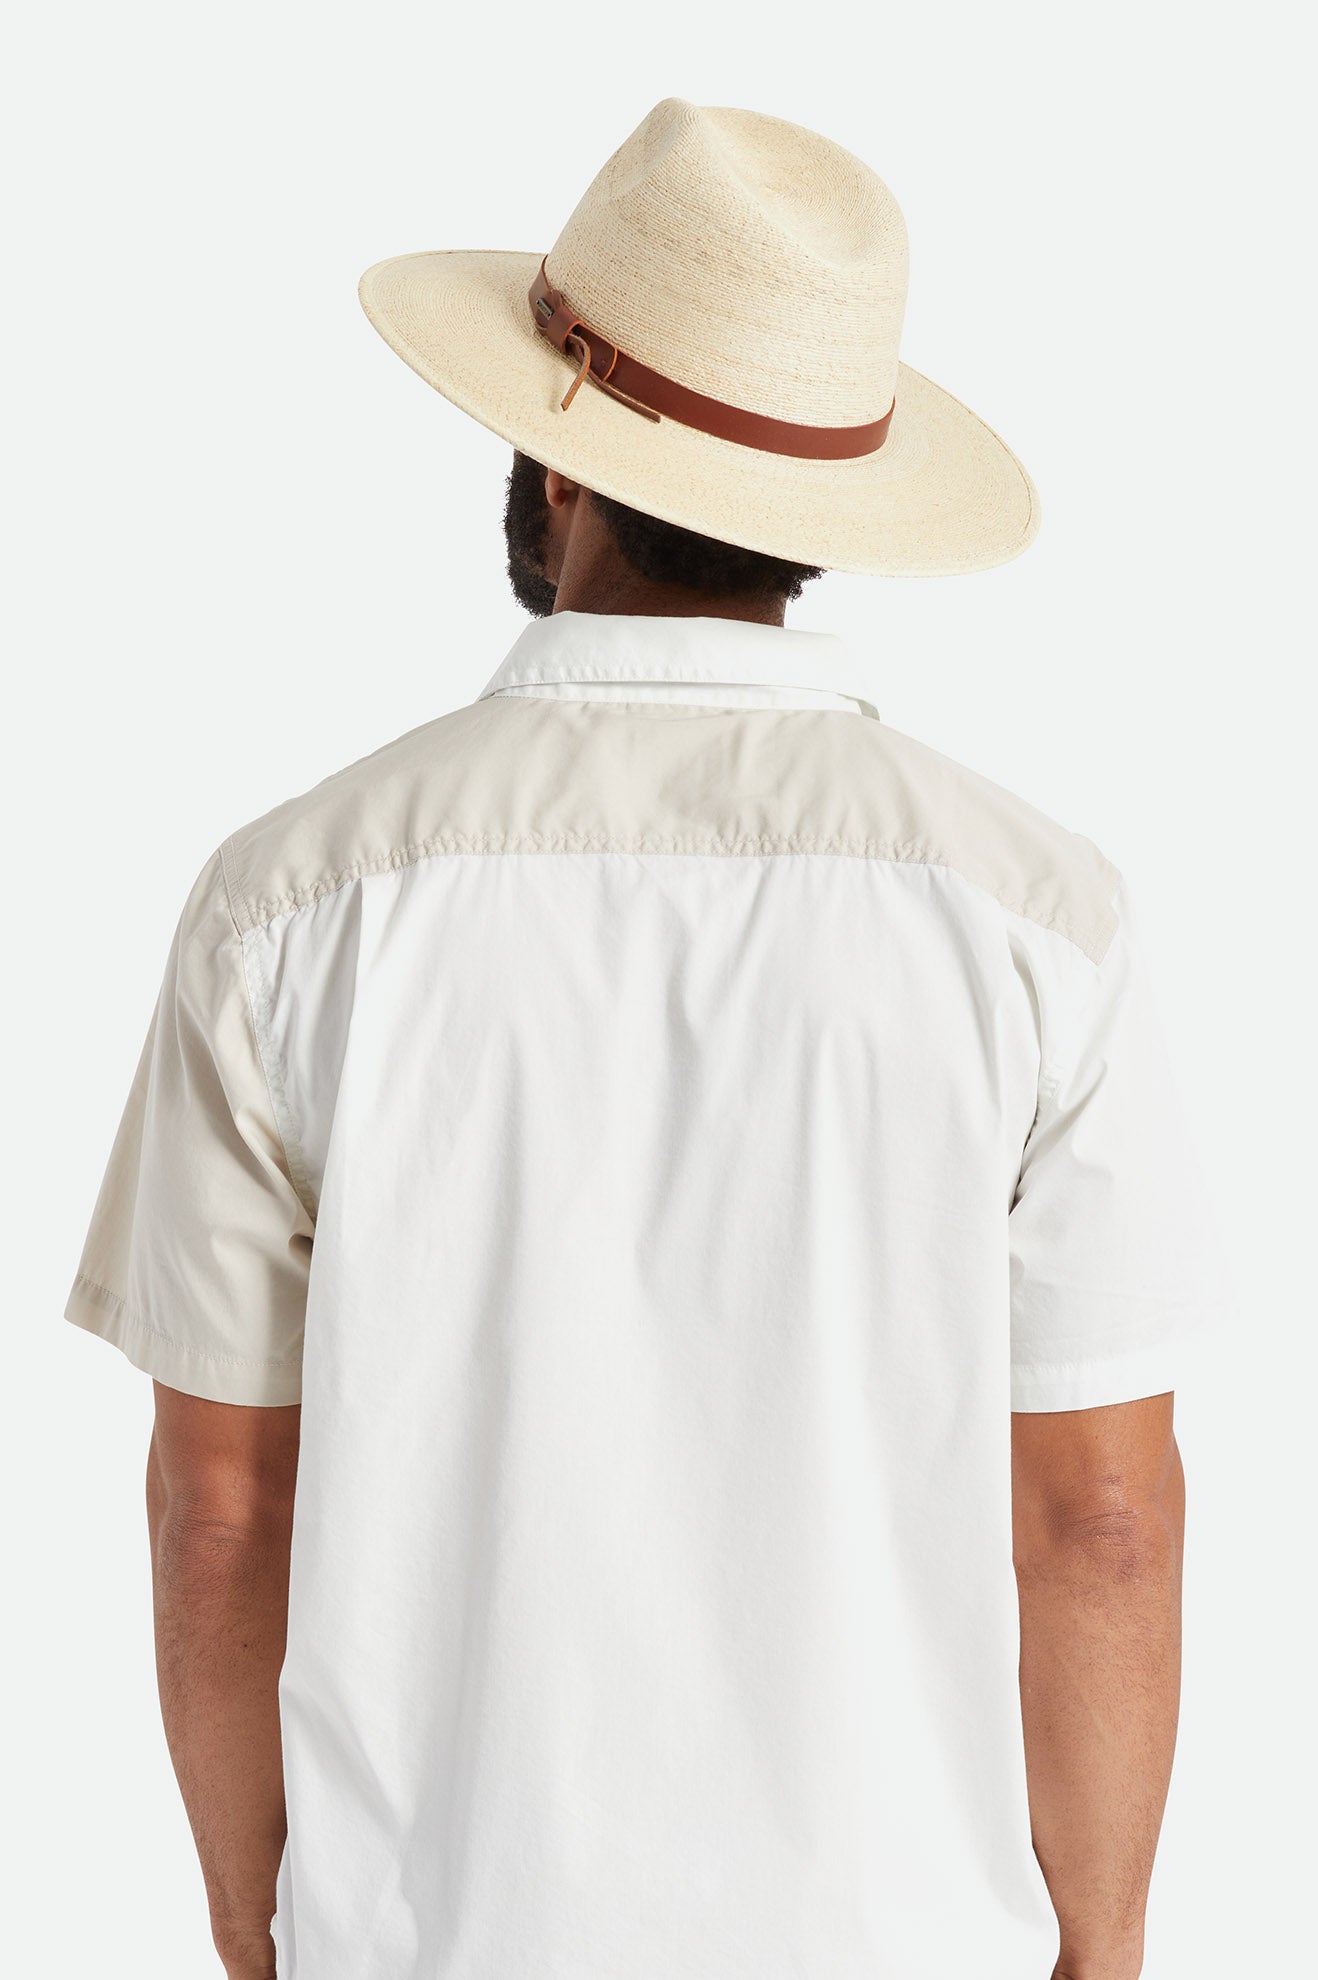 
                  
                    FIELD PROPER Natural Straw Hat
                  
                